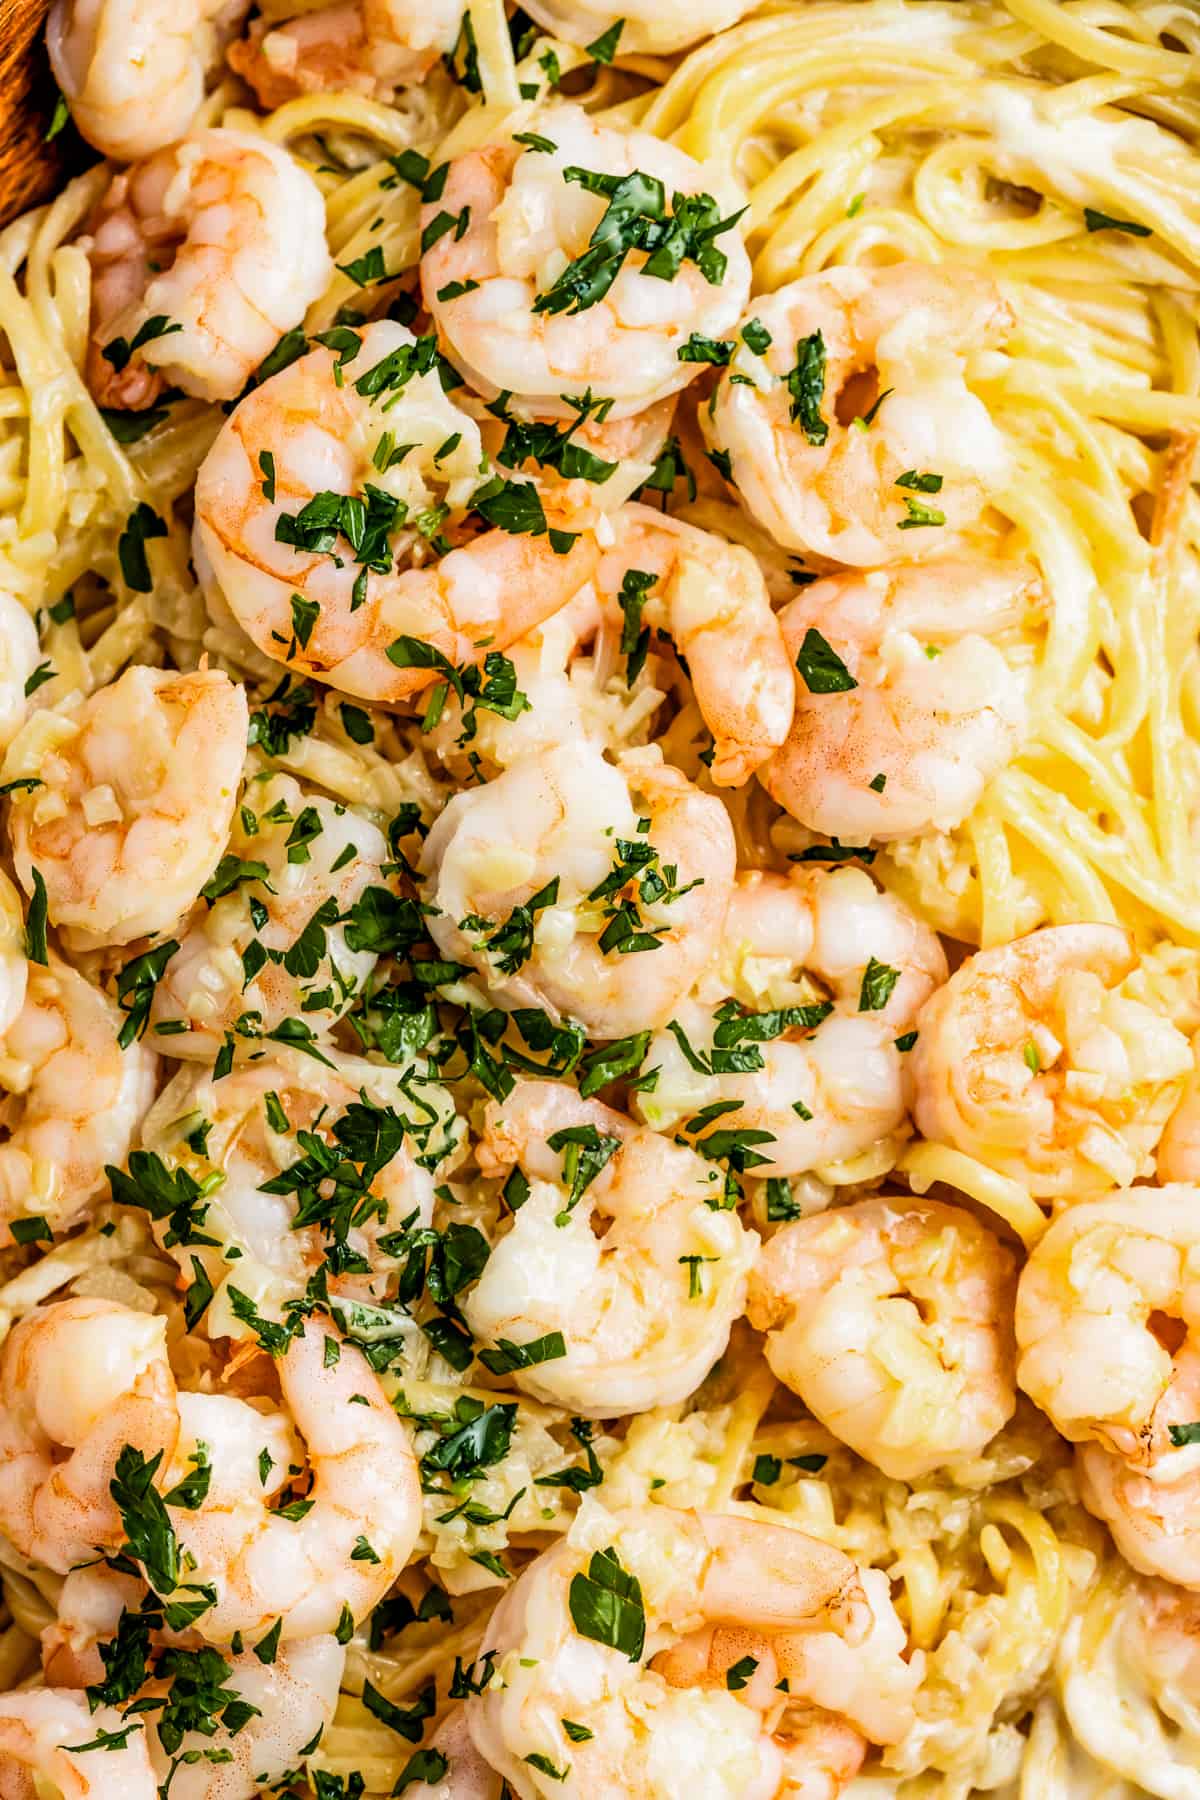 up close shot of shrimp arranged over linguine pasta and garnished with green herbs.